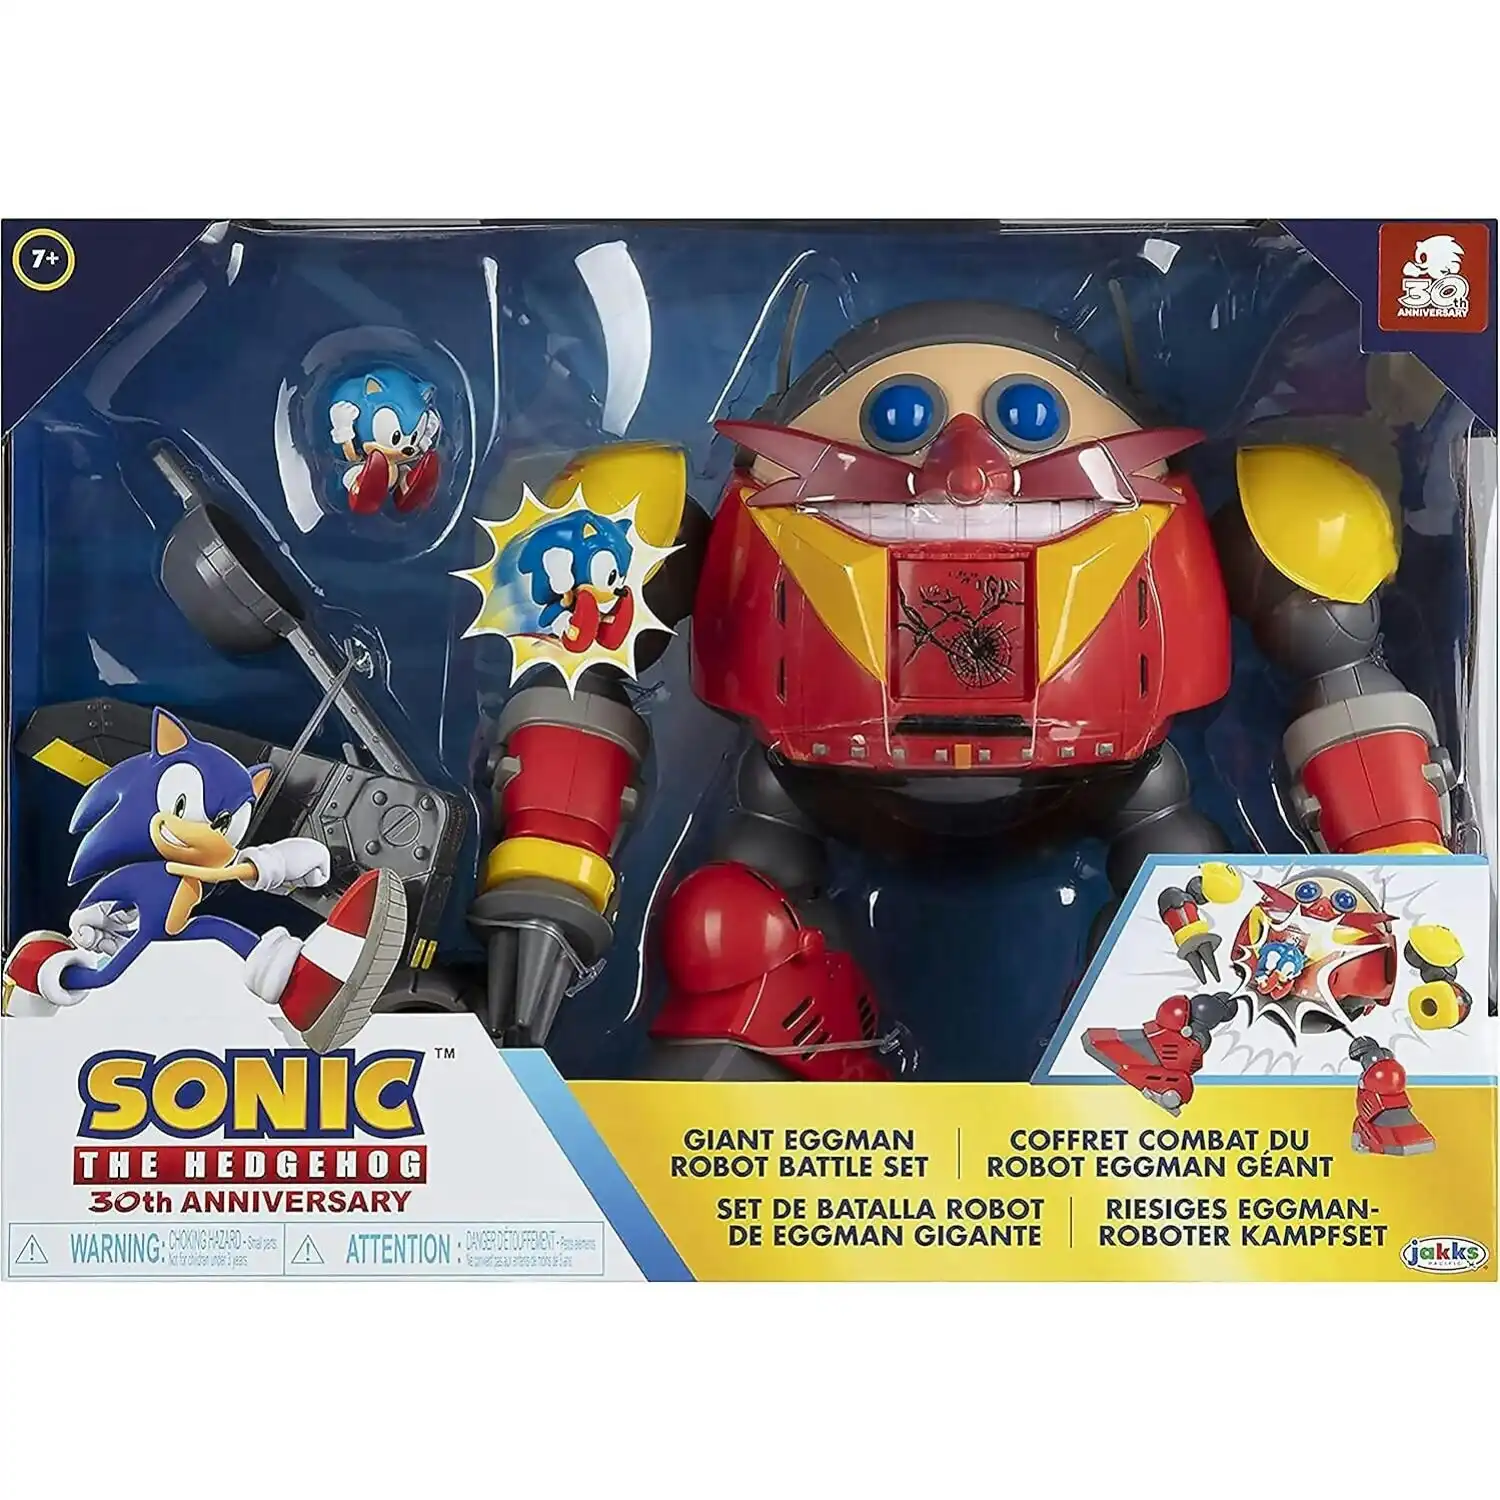 Sonic the Hedgehog - Giant Eggman Robot Battle Set With Catapult